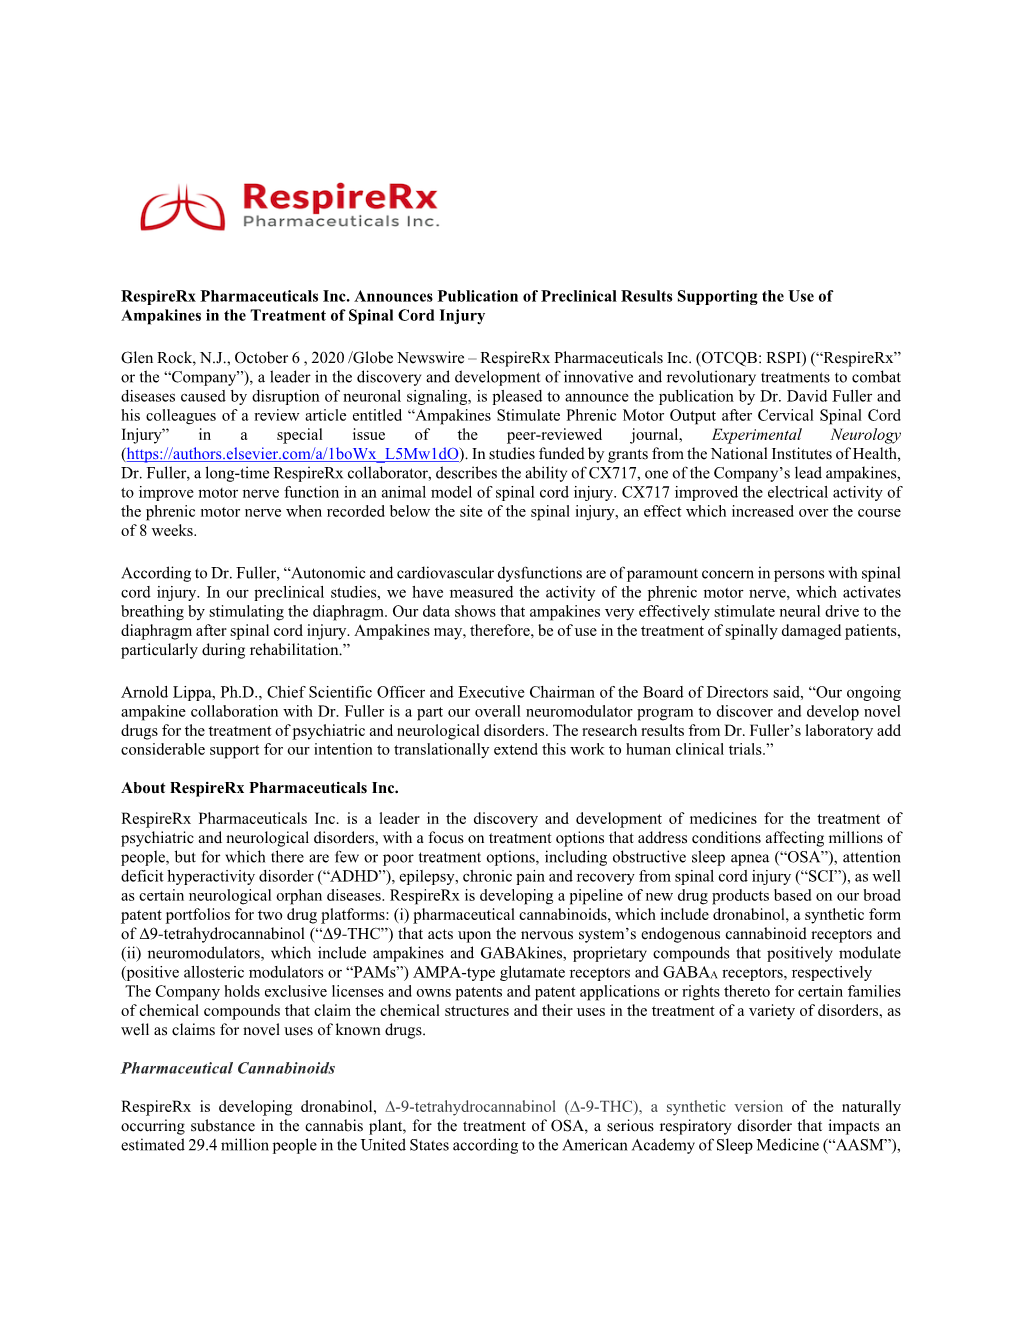 10/06/2020 – Respirerx Pharmaceuticals Inc. Announces